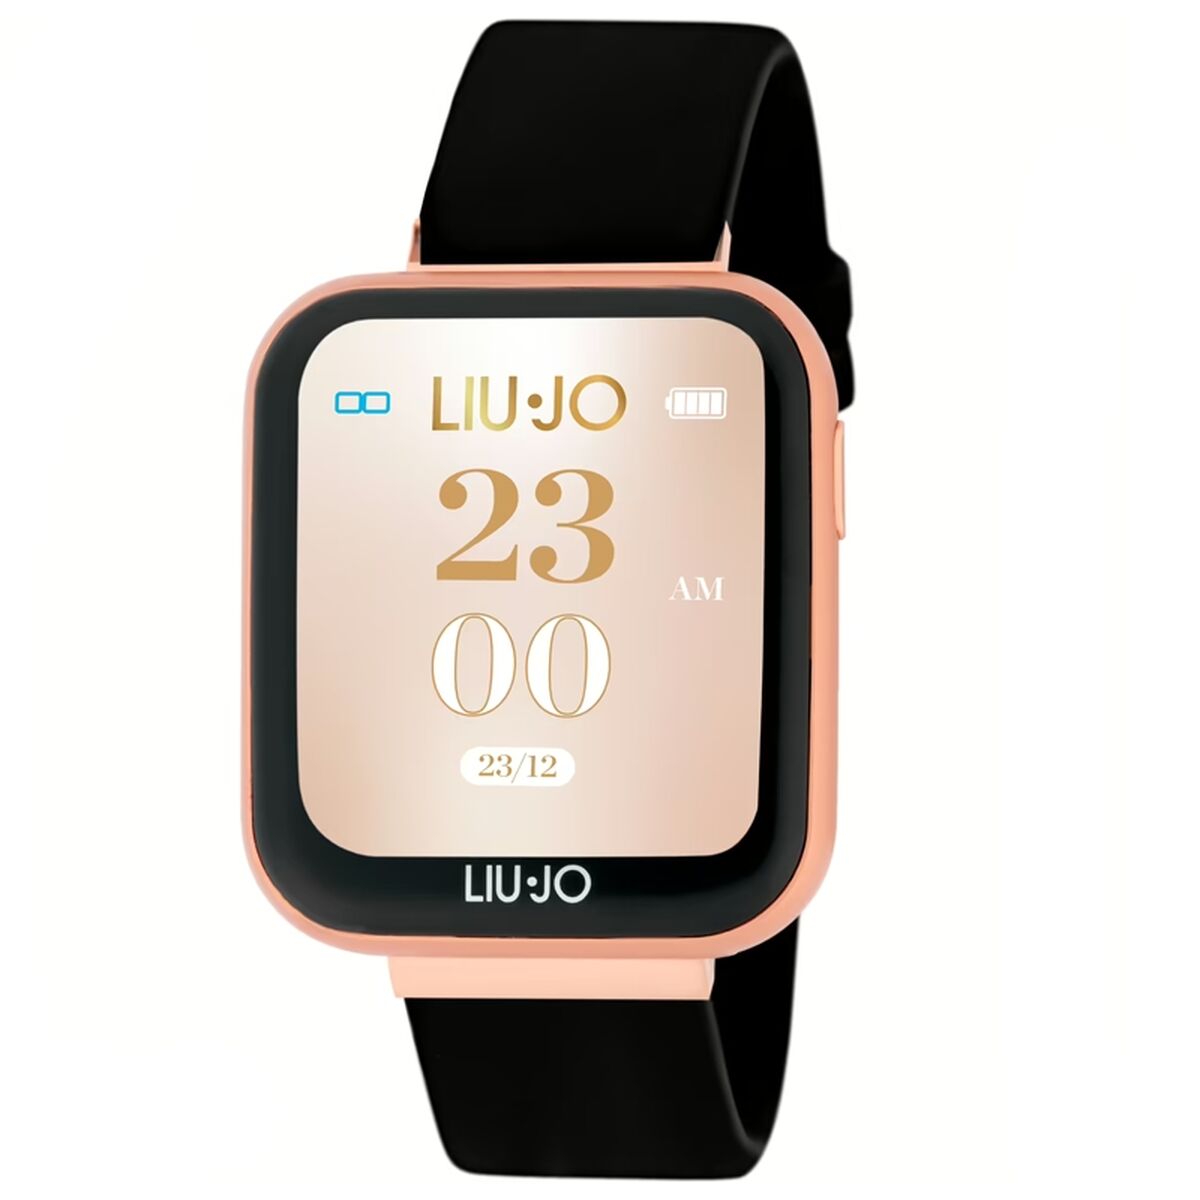 Kaufe Smartwatch LIU JO SWLJ110 bei AWK Flagship um € 170.00